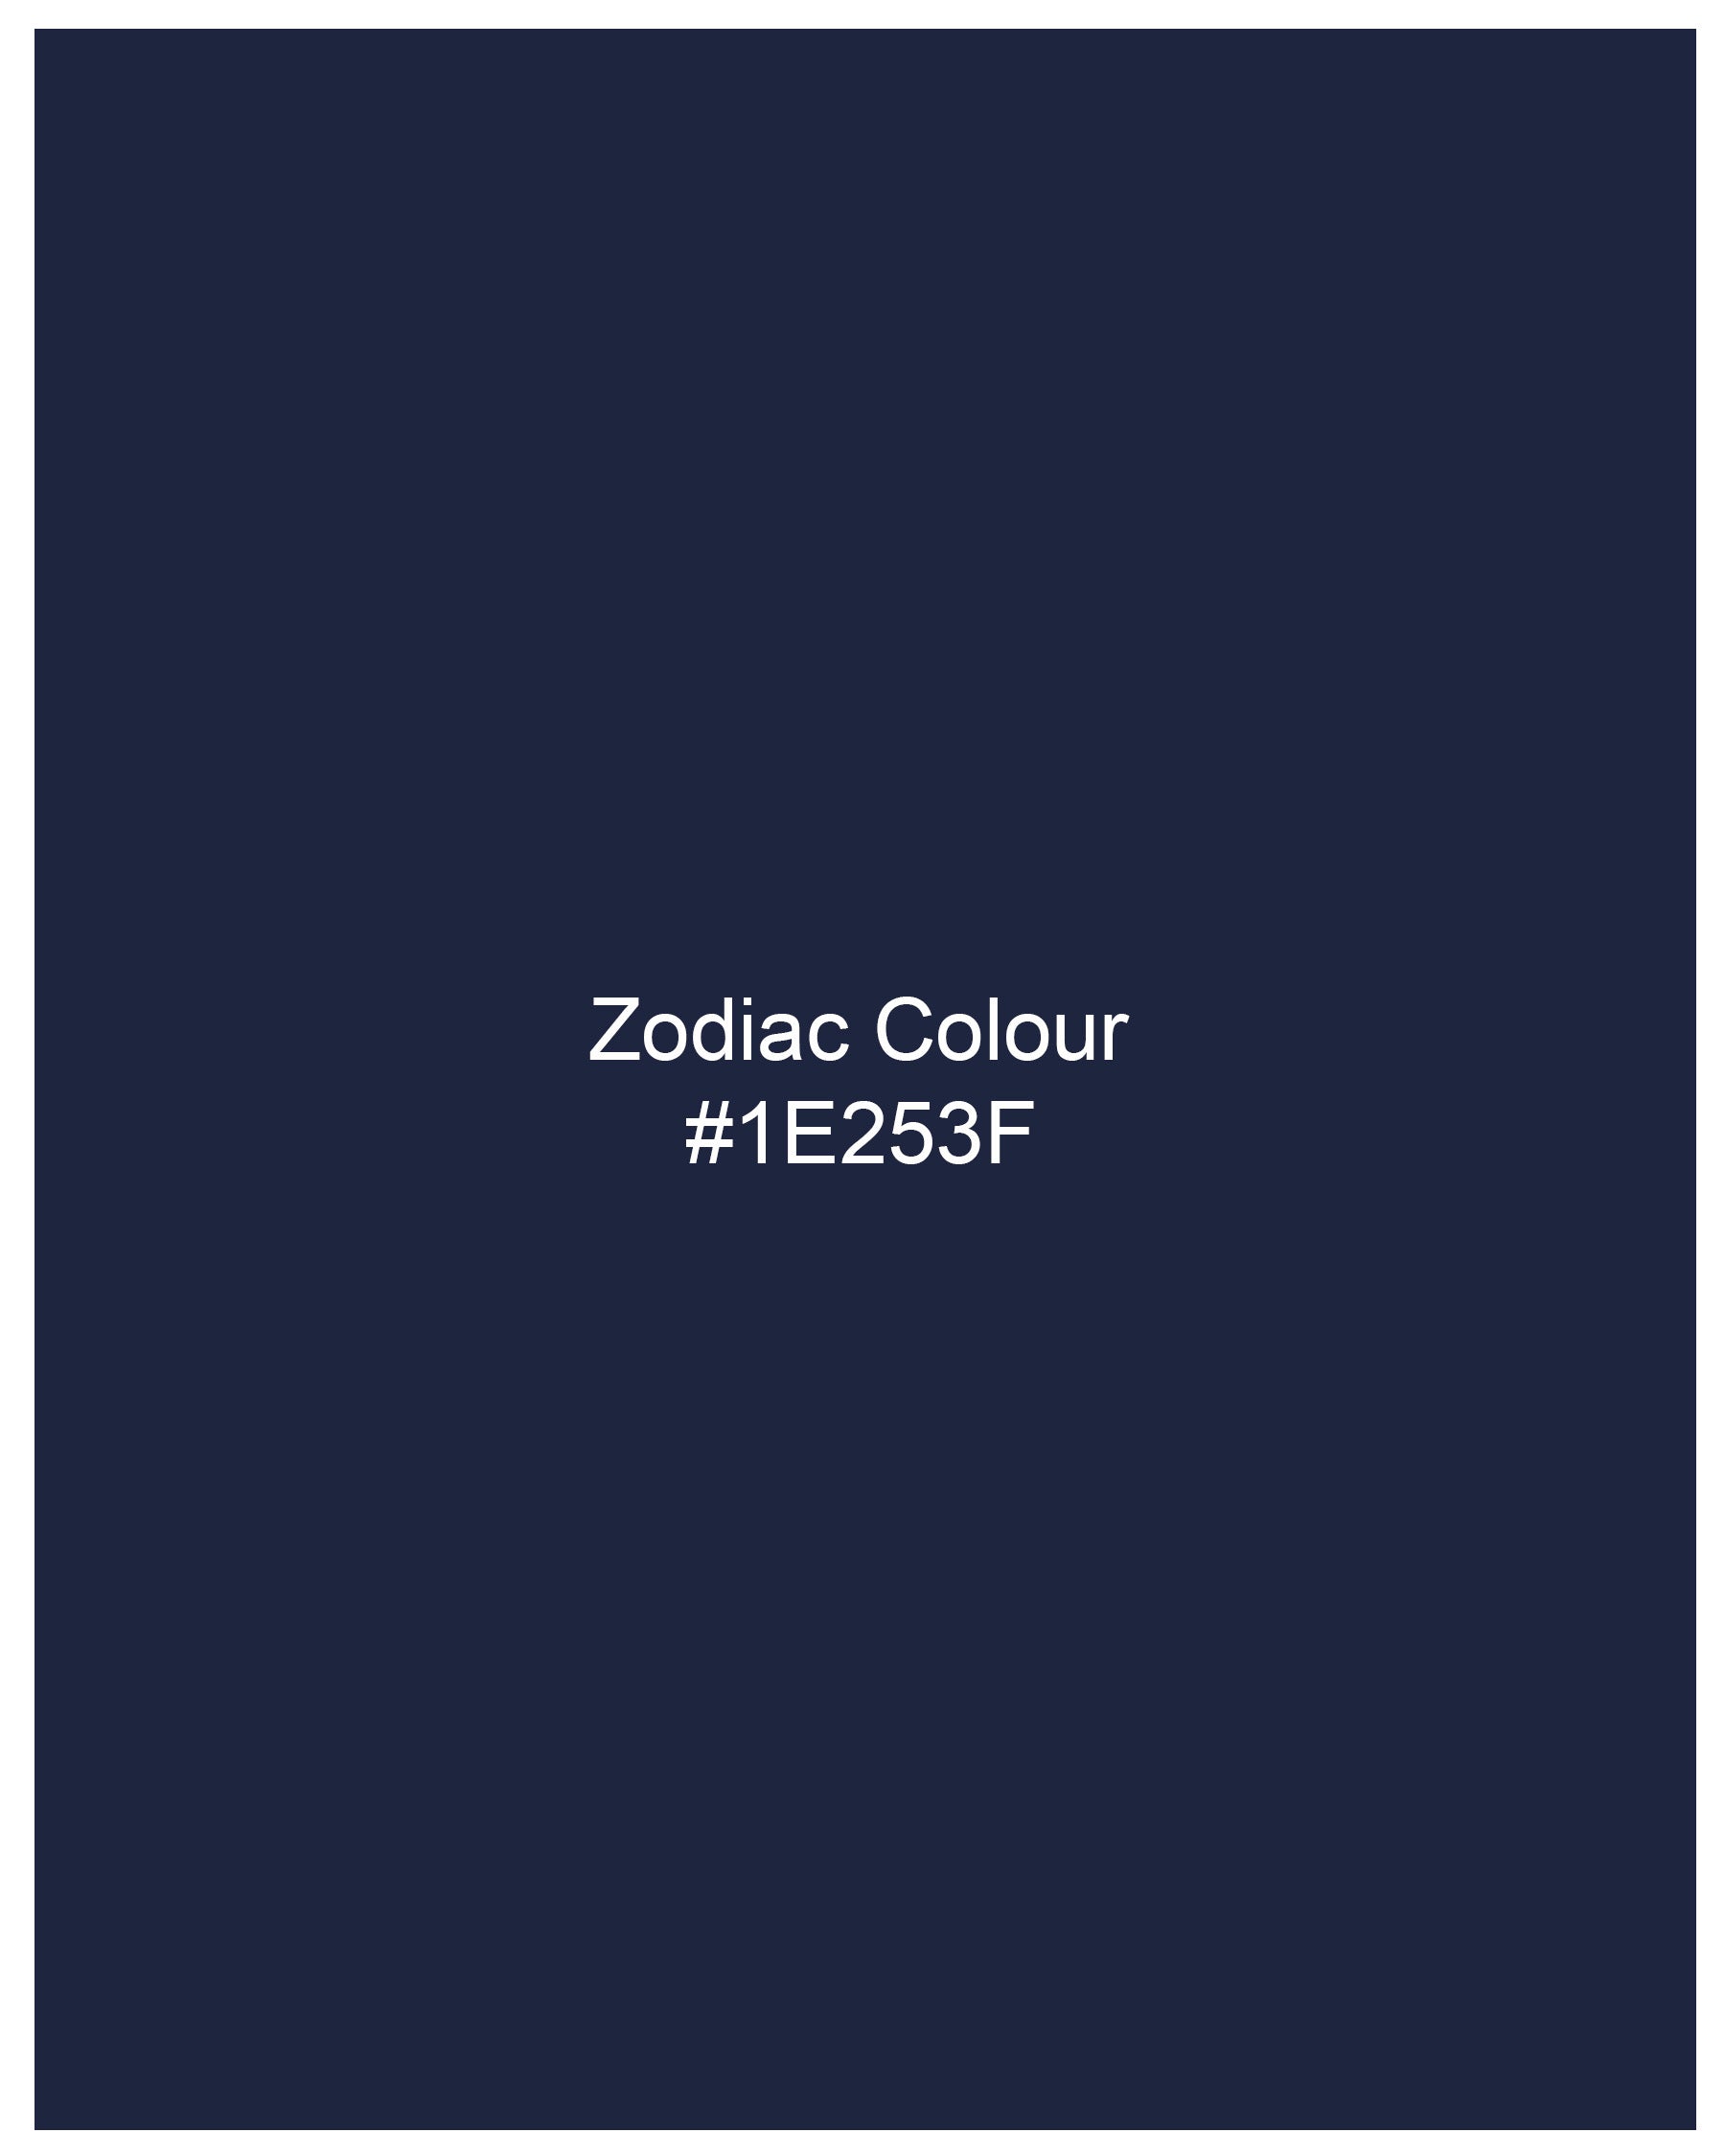 Zodiac Blue Subtle Checkered Dobby Textured Premium Giza Cotton Shirt 8394-CA-38, 8394-CA-H-38, 8394-CA-39,8394-CA-H-39, 8394-CA-40, 8394-CA-H-40, 8394-CA-42, 8394-CA-H-42, 8394-CA-44, 8394-CA-H-44, 8394-CA-46, 8394-CA-H-46, 8394-CA-48, 8394-CA-H-48, 8394-CA-50, 8394-CA-H-50, 8394-CA-52, 8394-CA-H-52